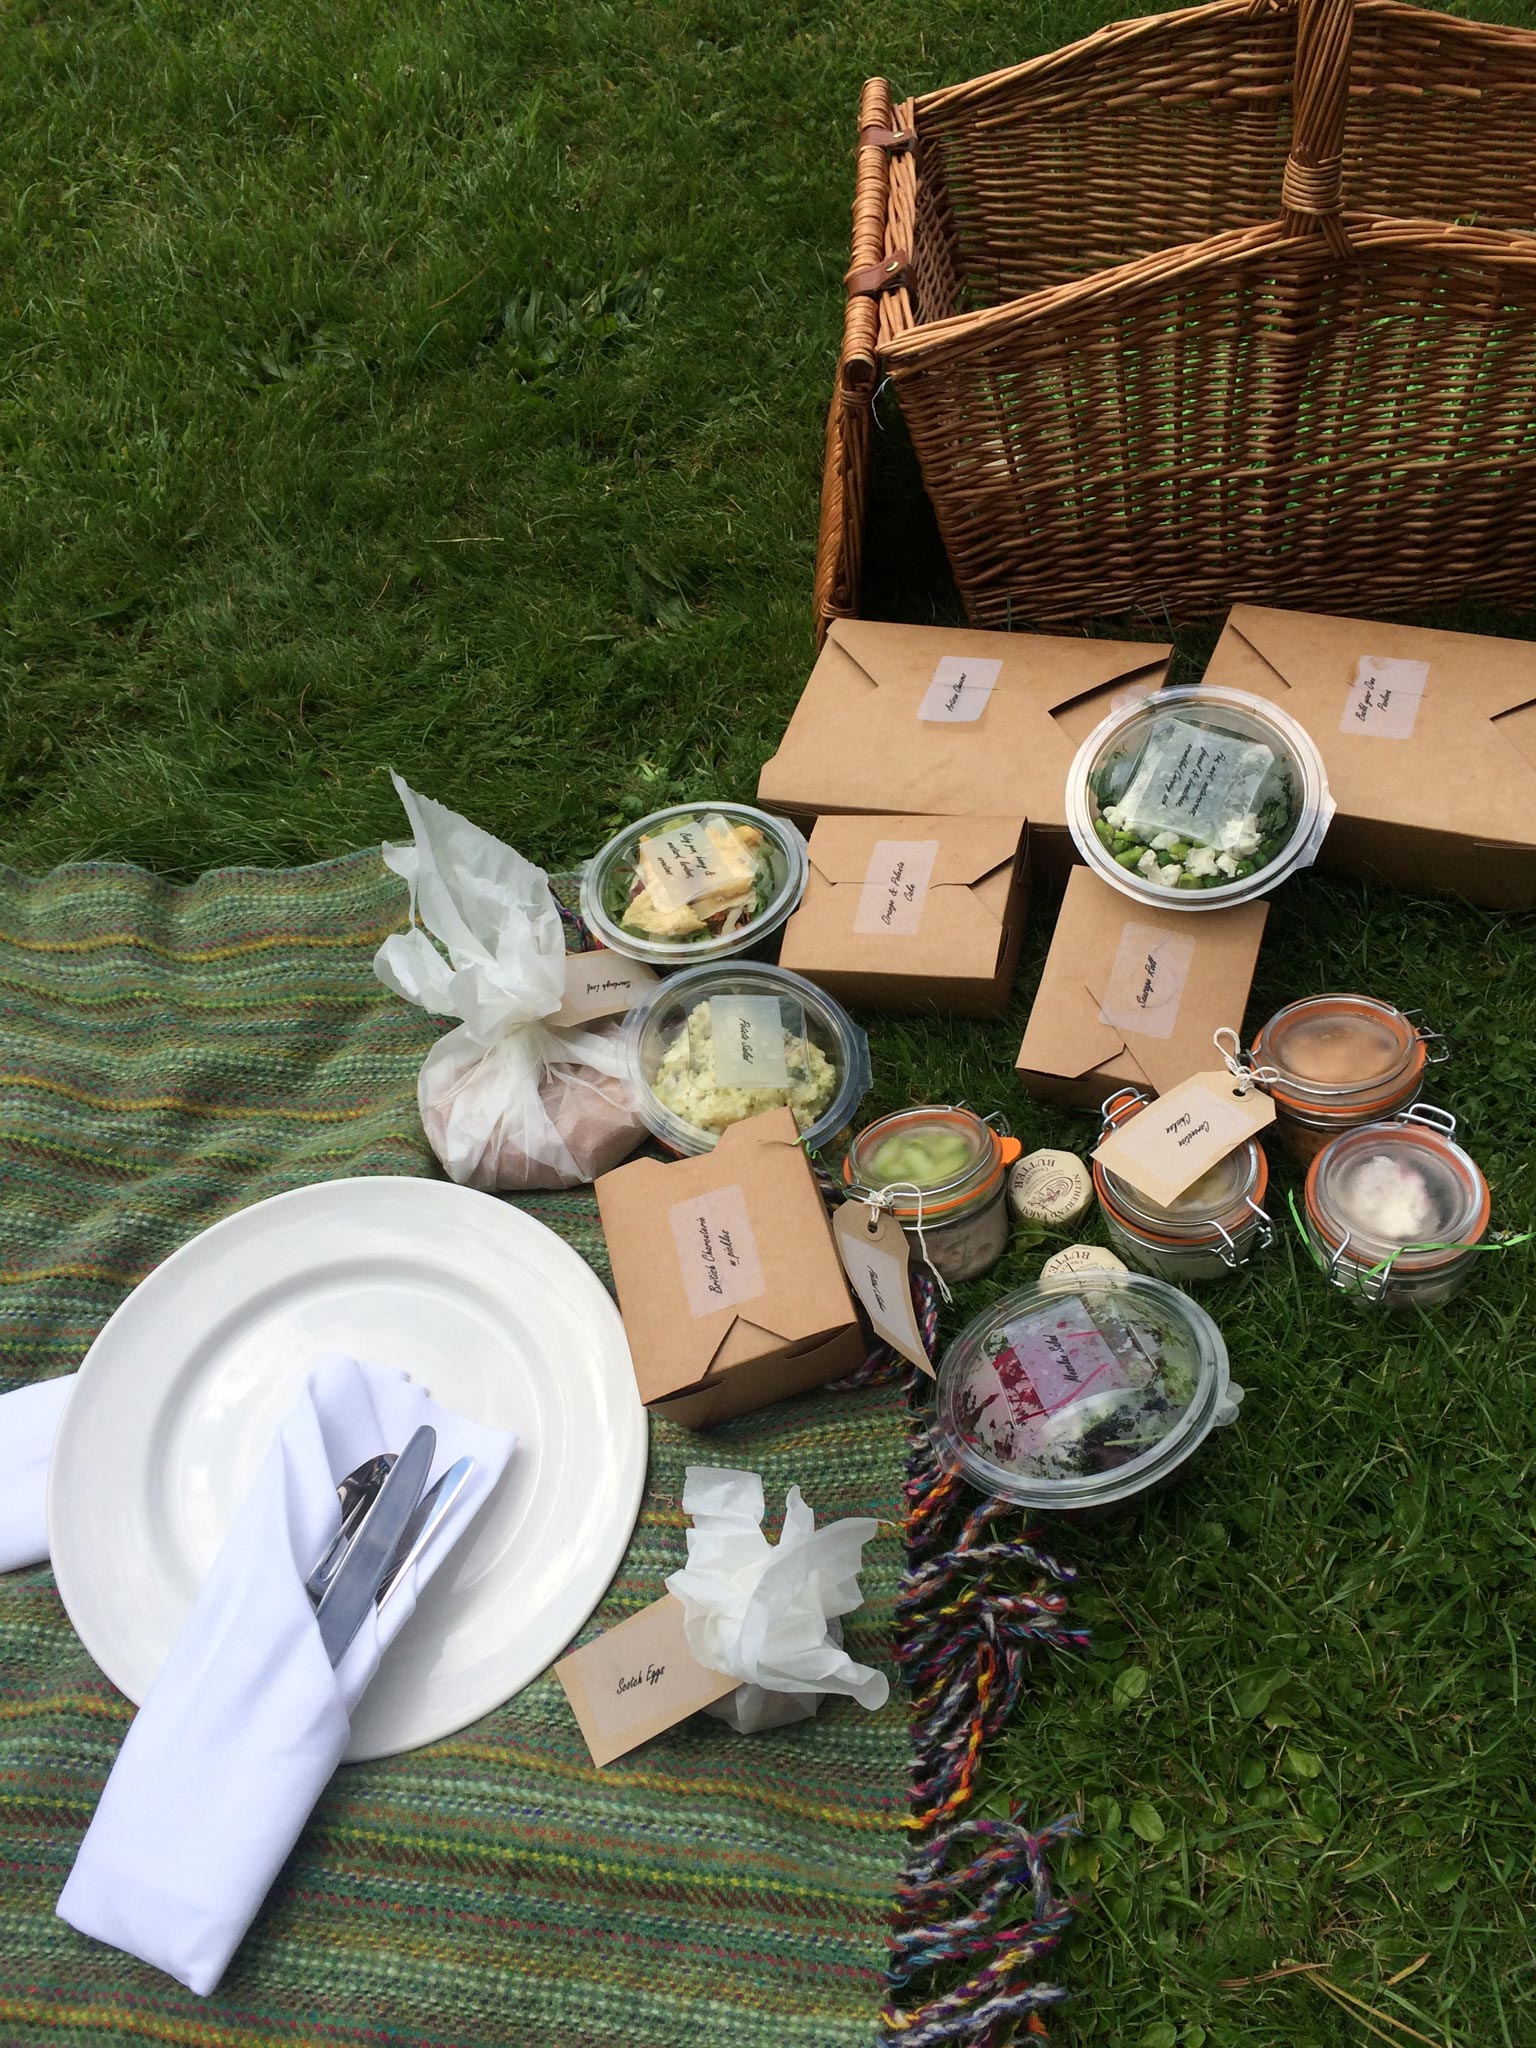 Hamper your plans: many restaurants now offer picnics